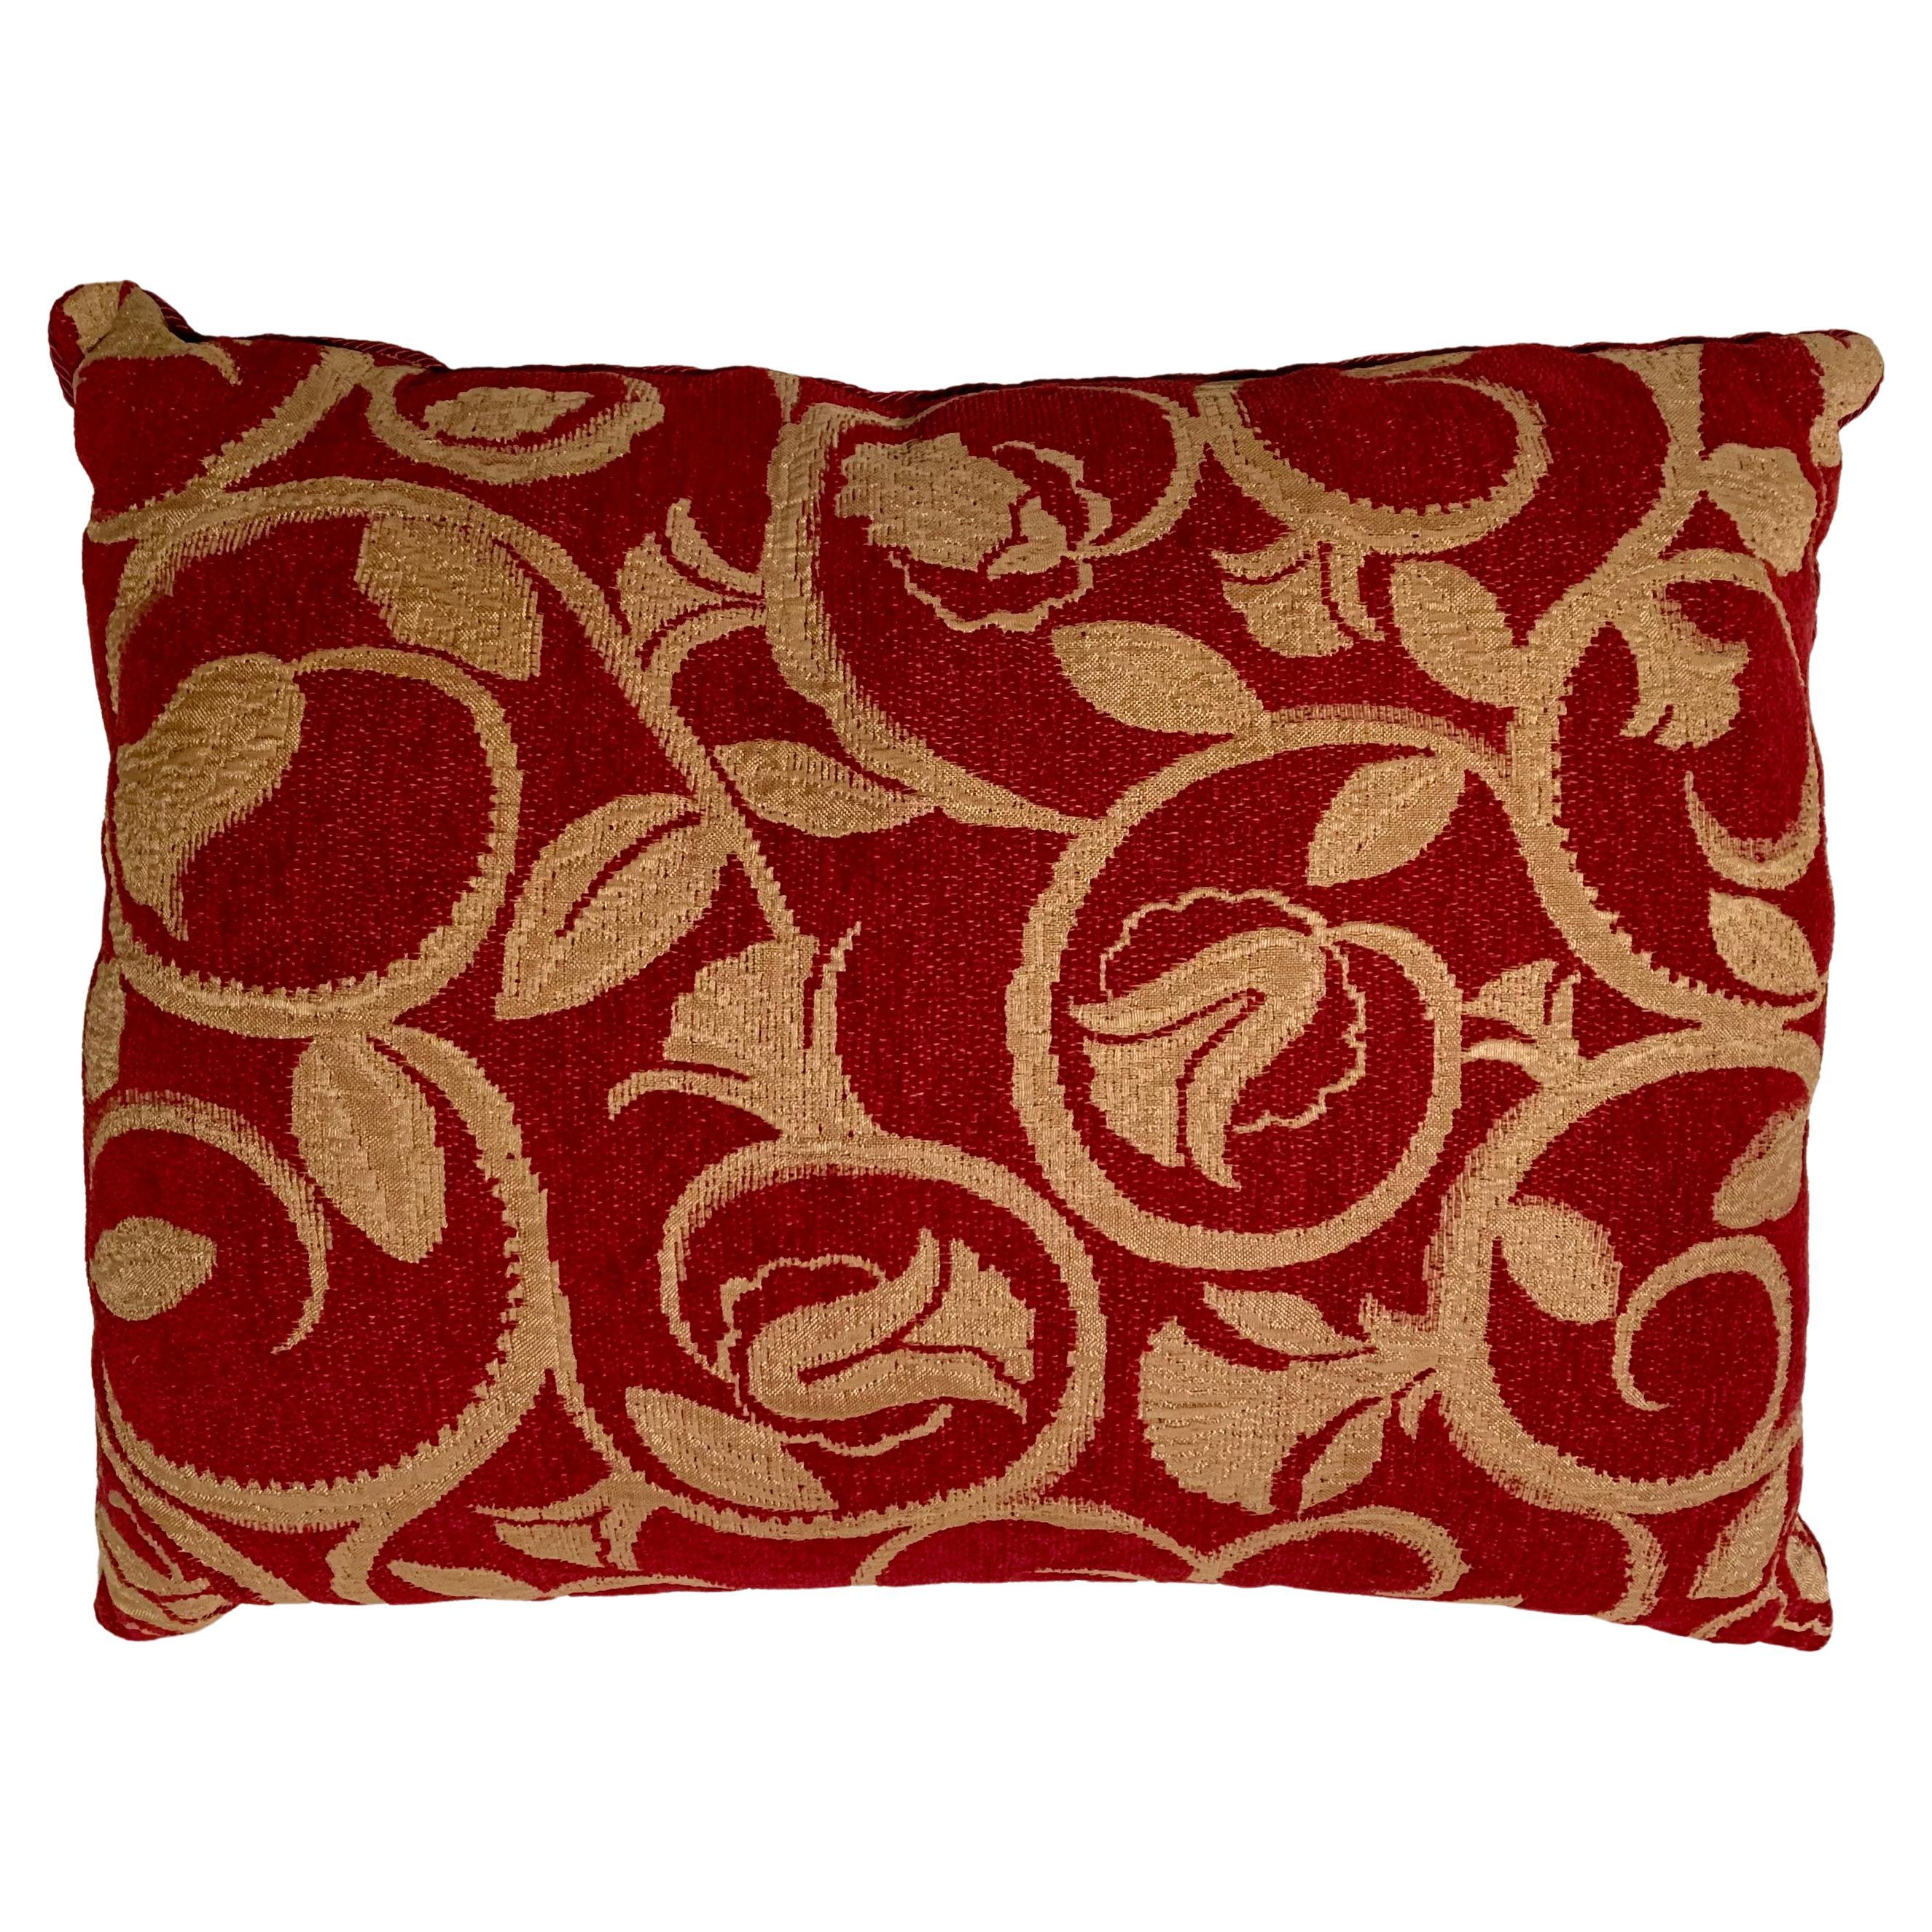 Antique Metallic Thread Burgundy Textured Velvet Large Baroque Style Pillow